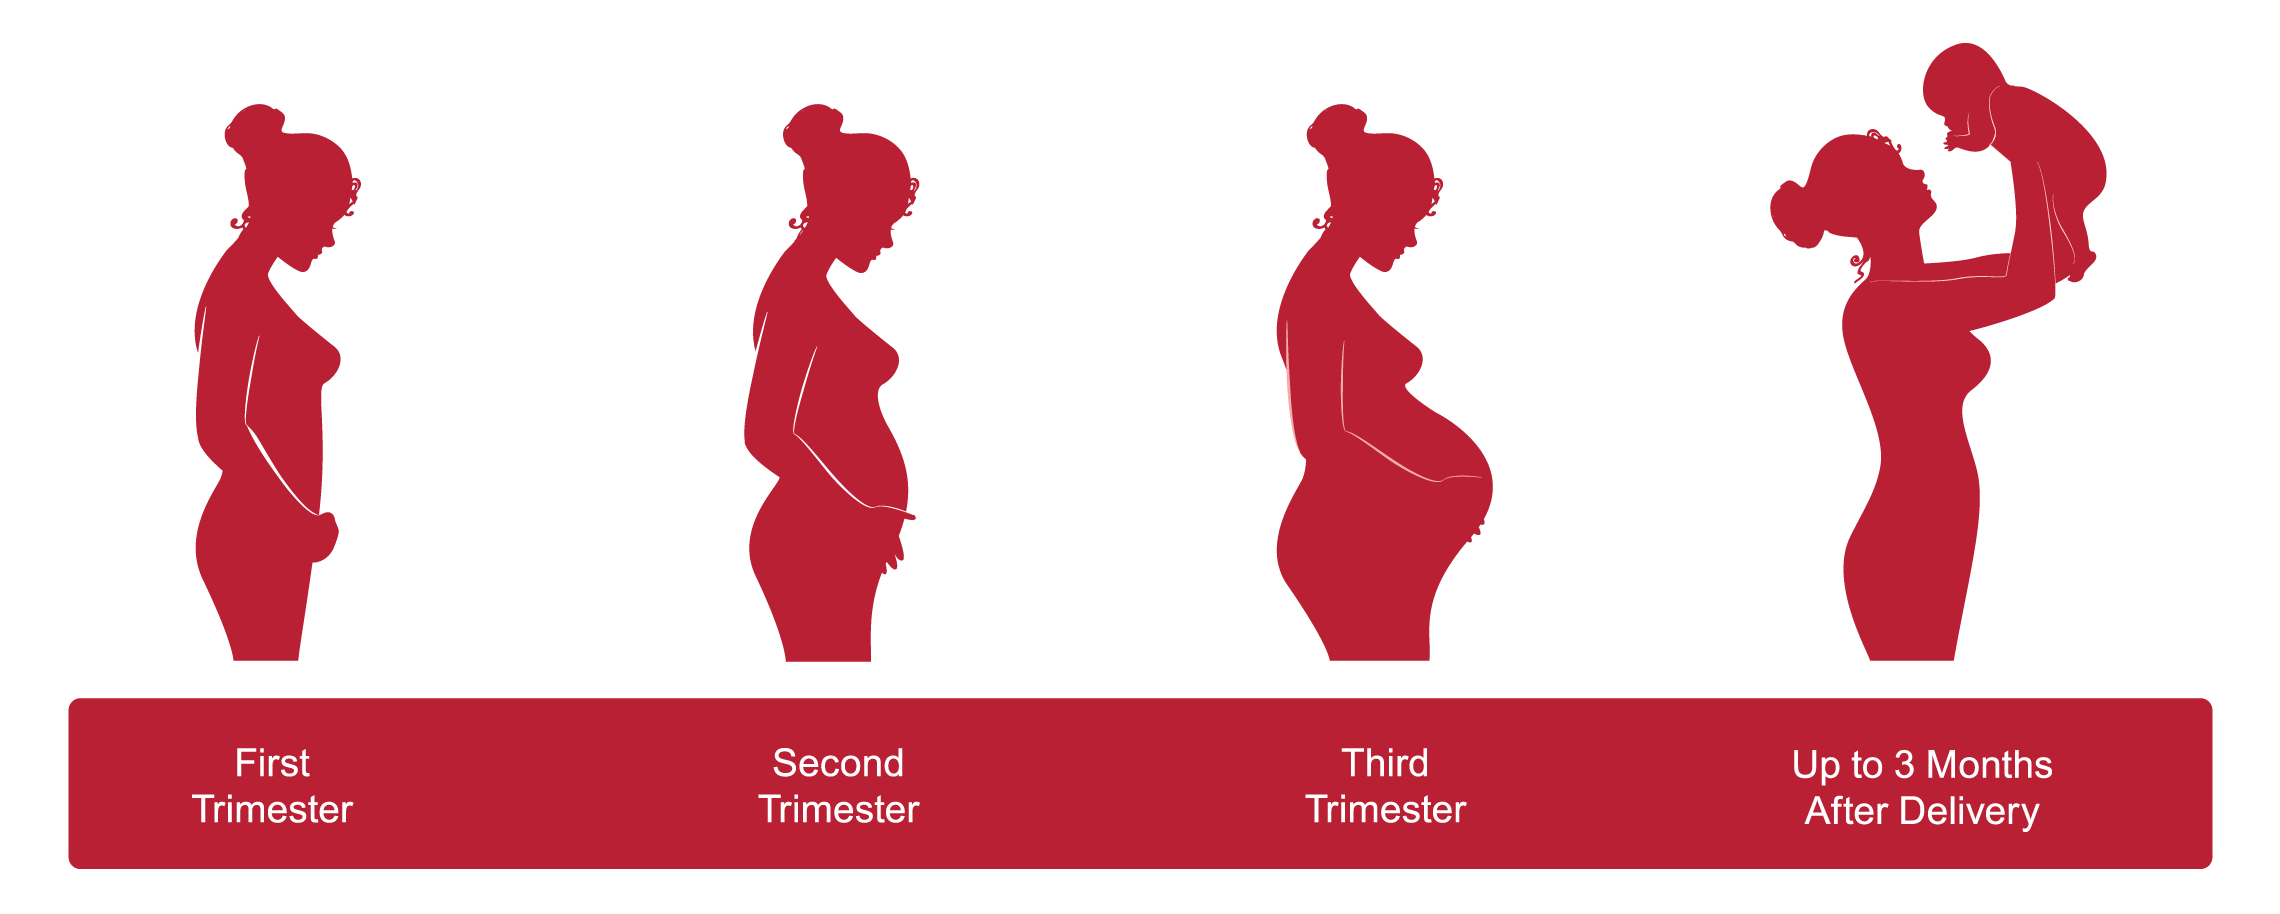 Pregnancy timeline